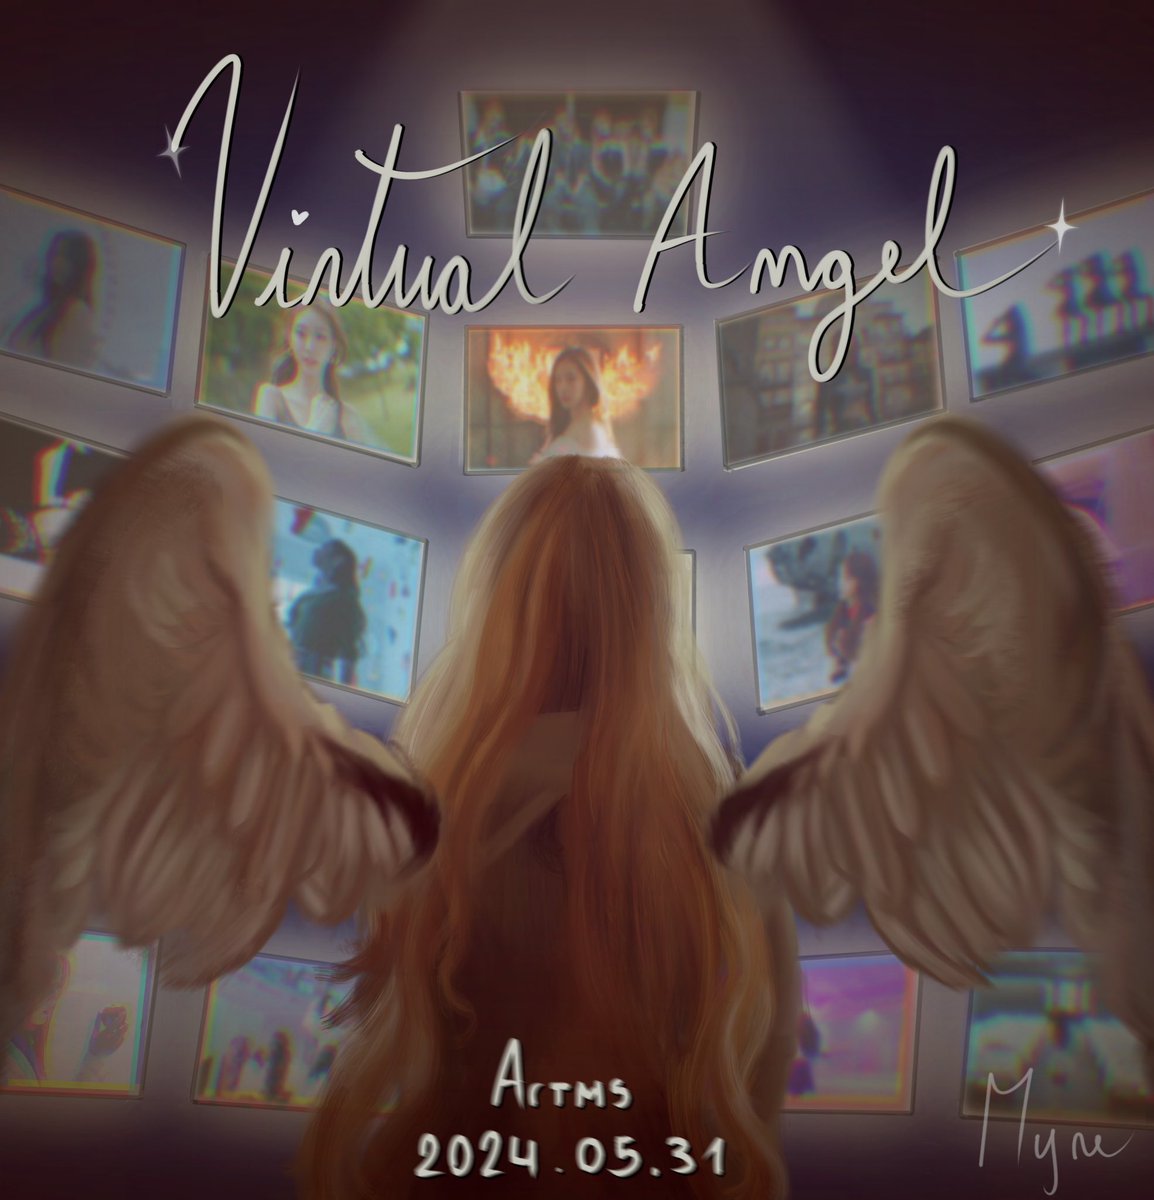 ARTMS ‘Virtual Angel’ 

#loonathefanart #loonafanart #artms